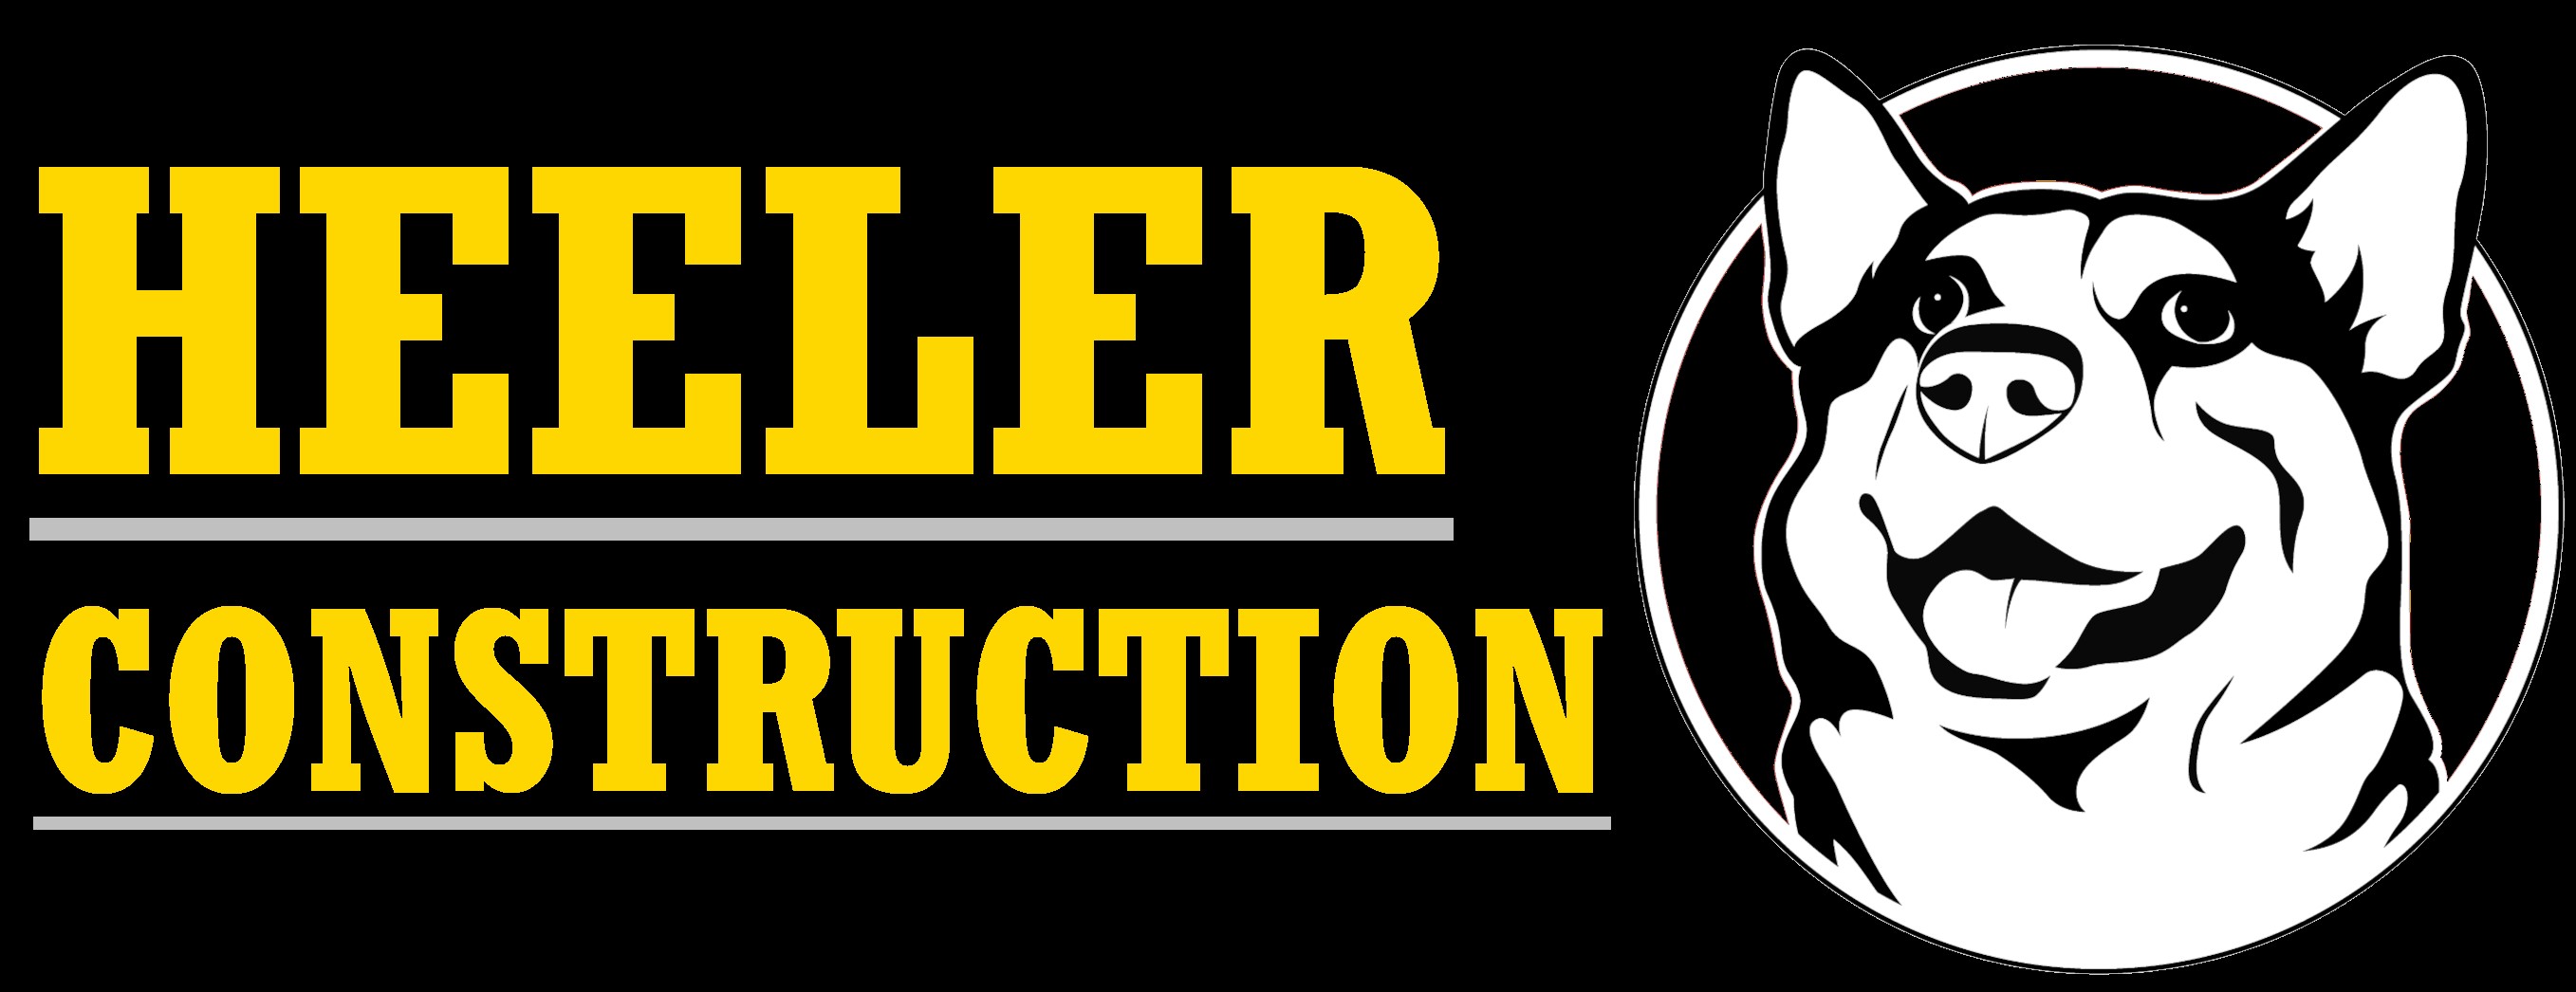 Heeler Construction Logo